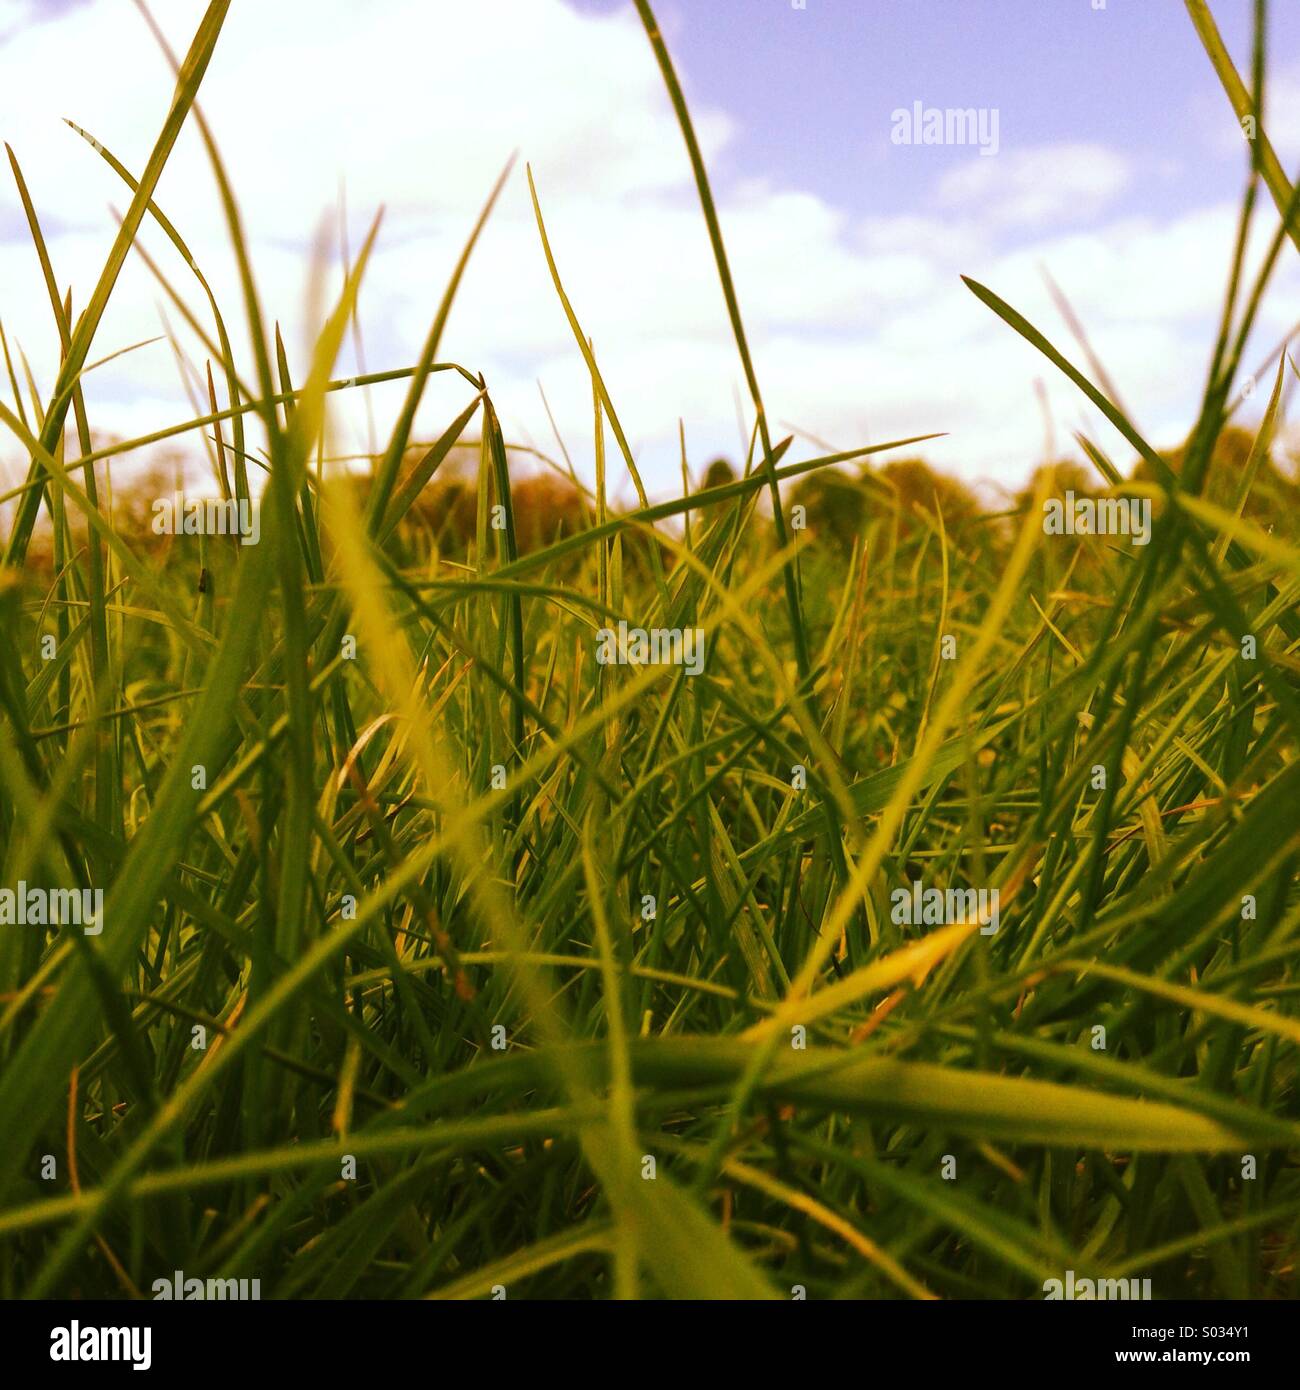 Grass close up Stock Photo